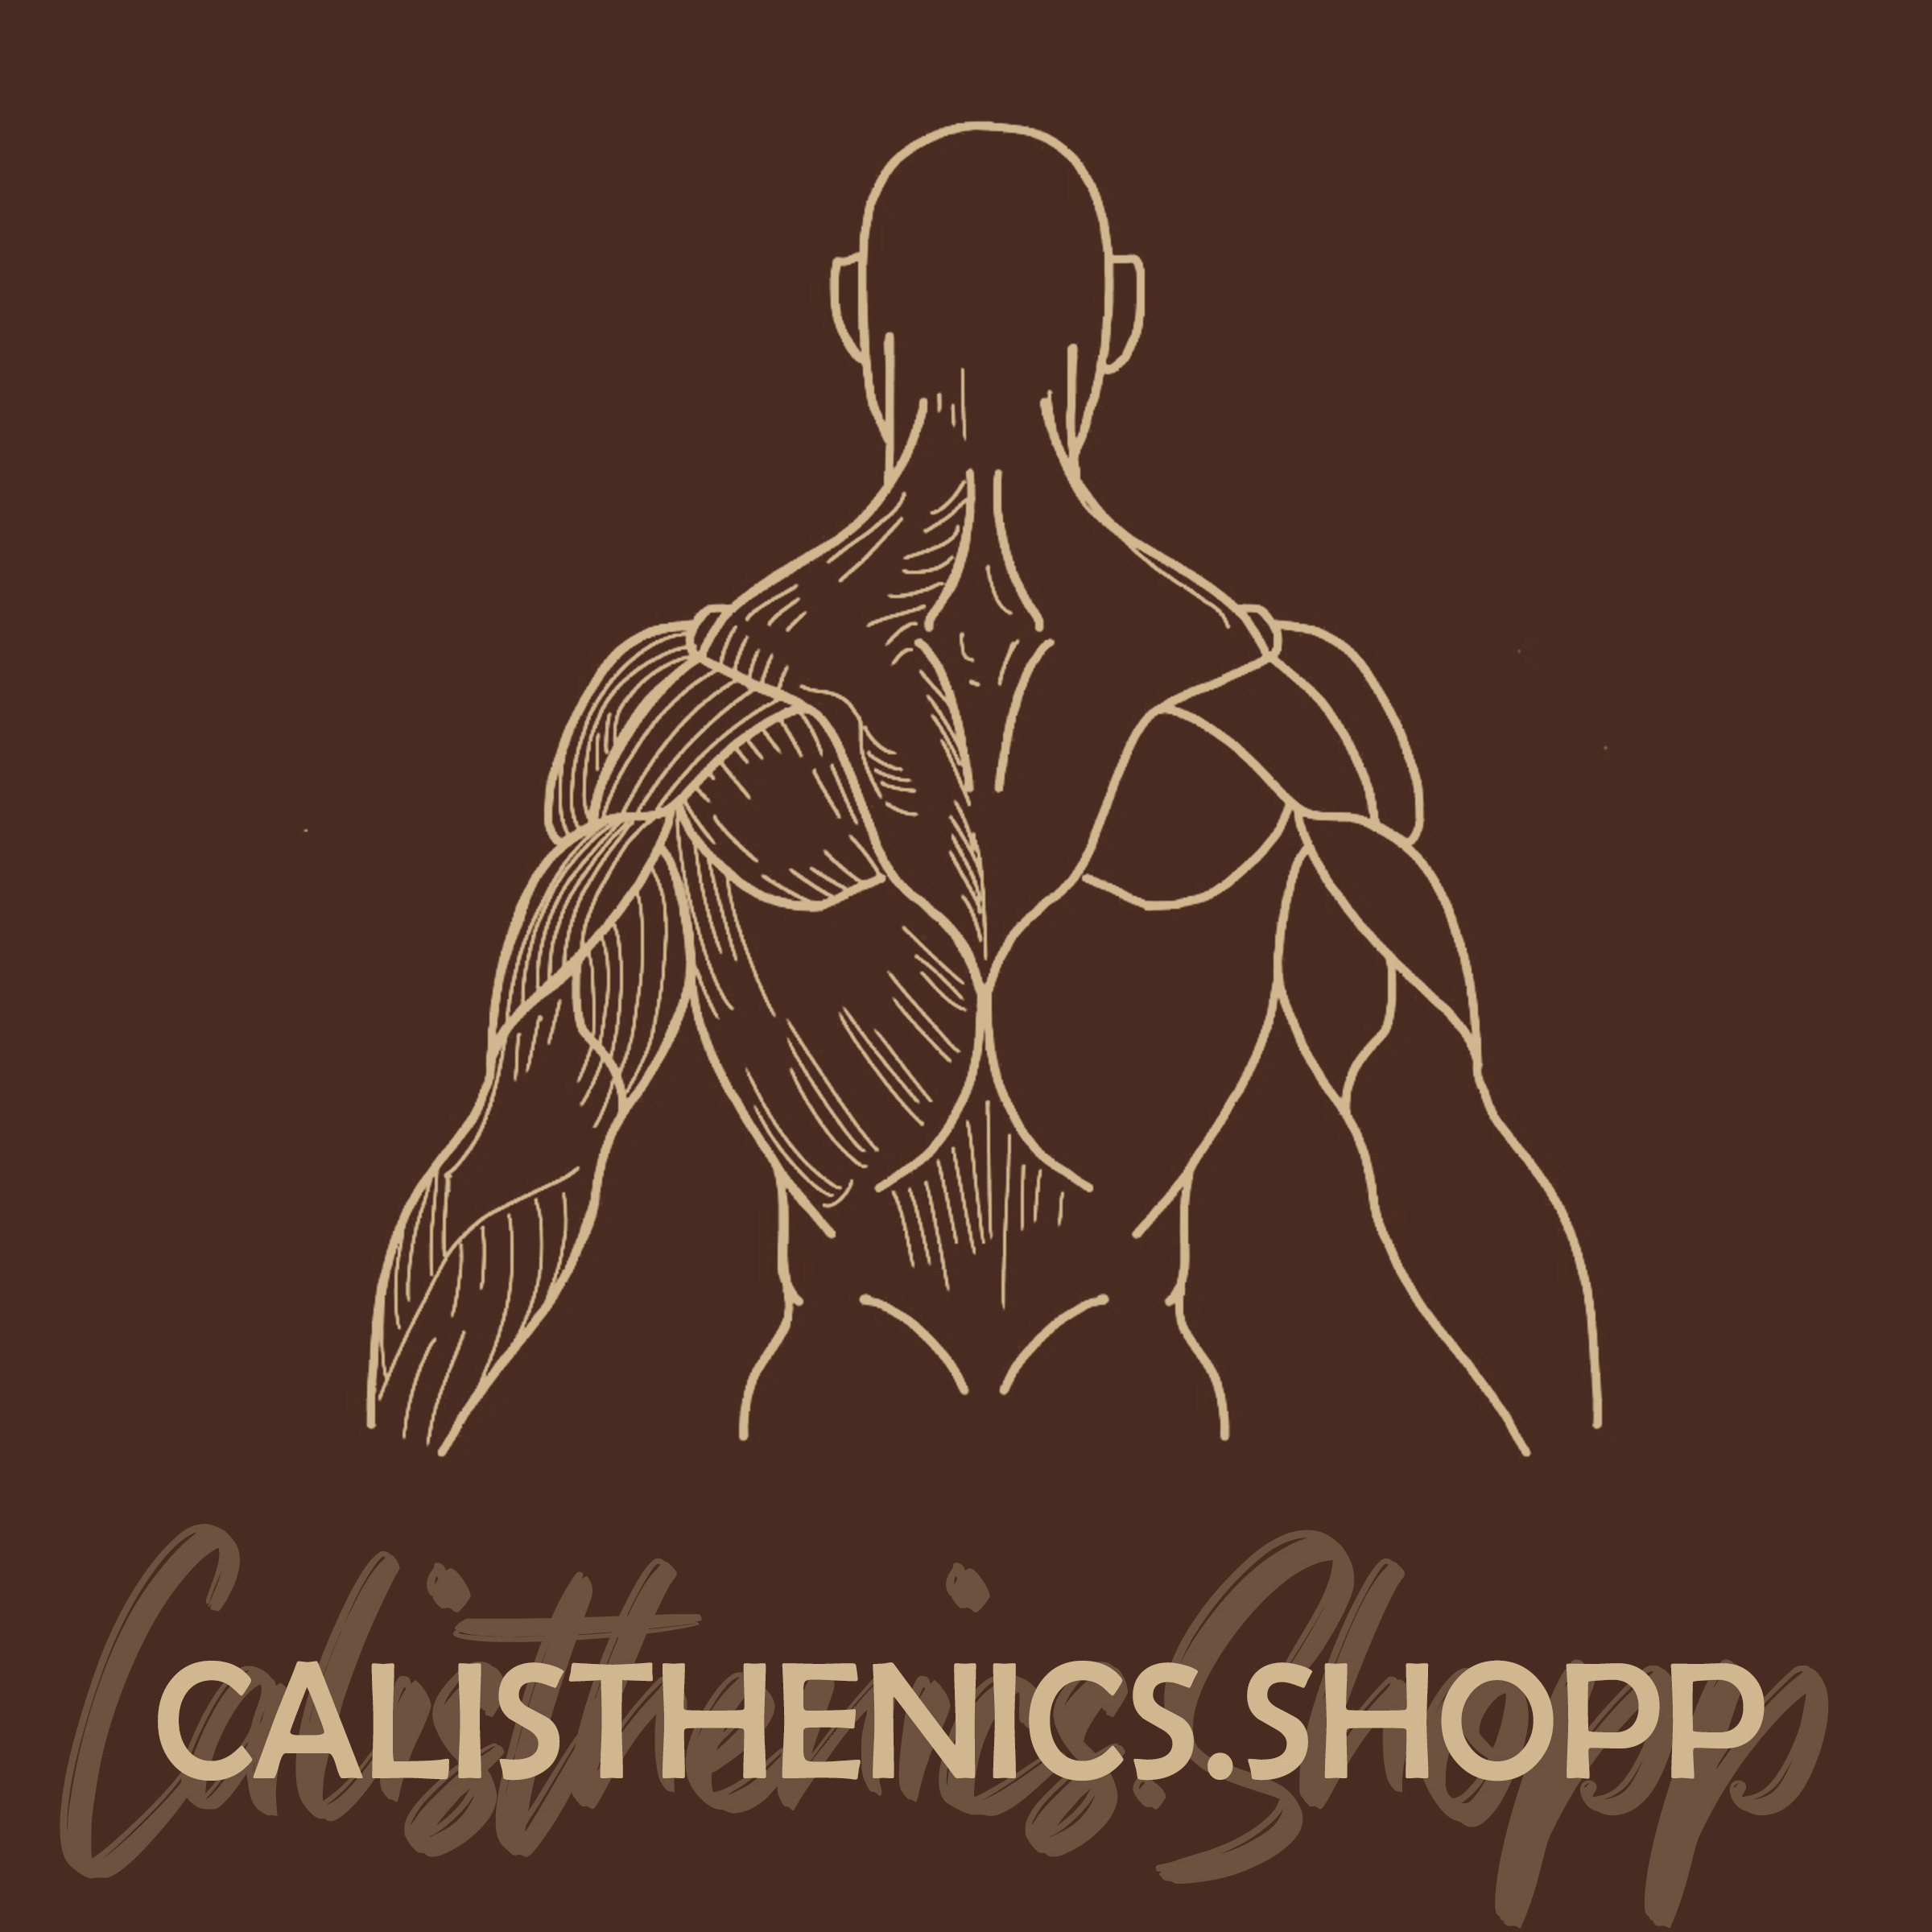 Calisthenicshopp